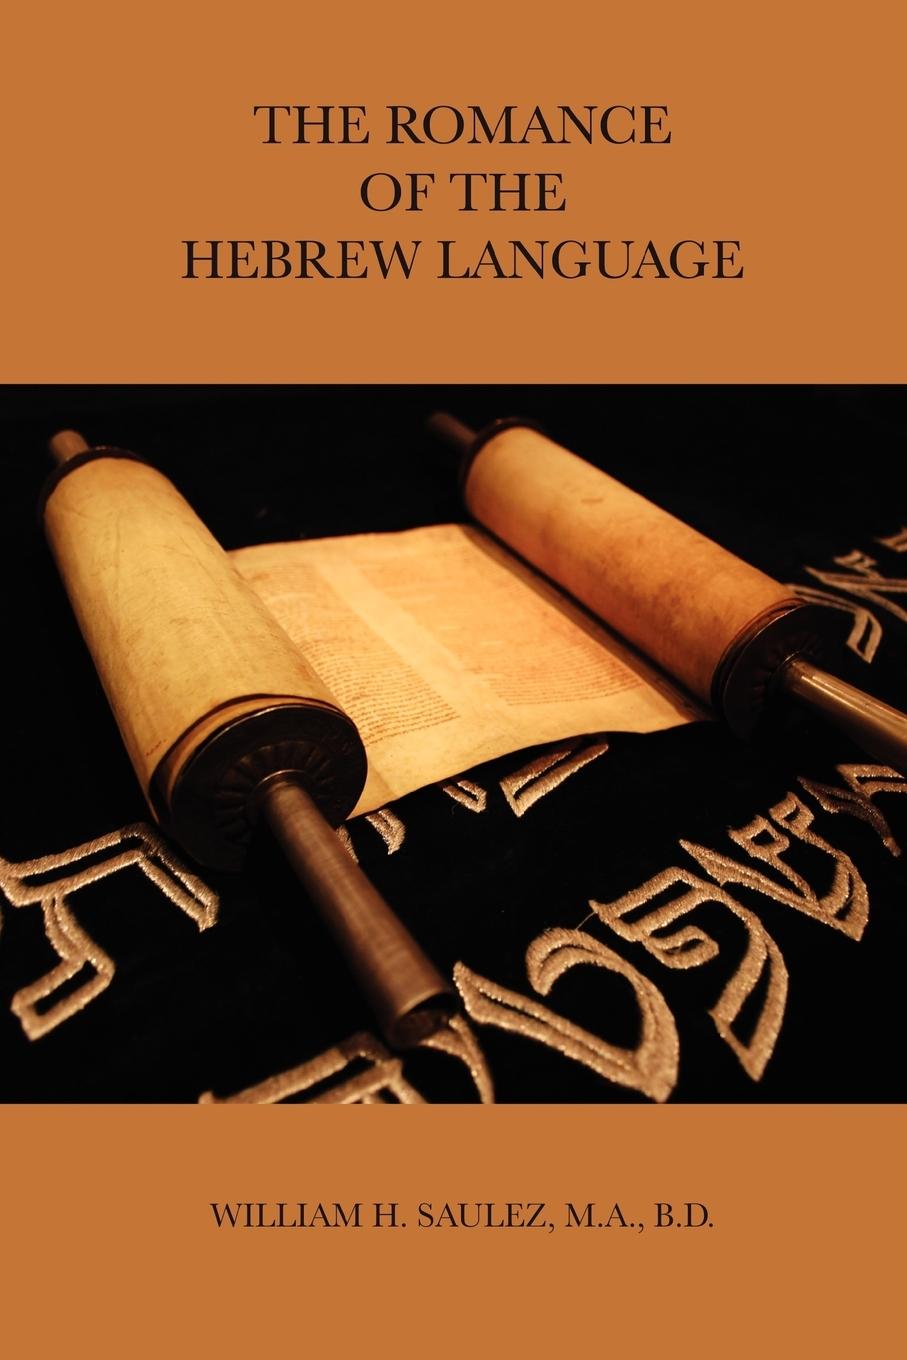 THE ROMANCE OF THE HEBREW LANGUAGE - Saulez, M. A. B. D. William H.